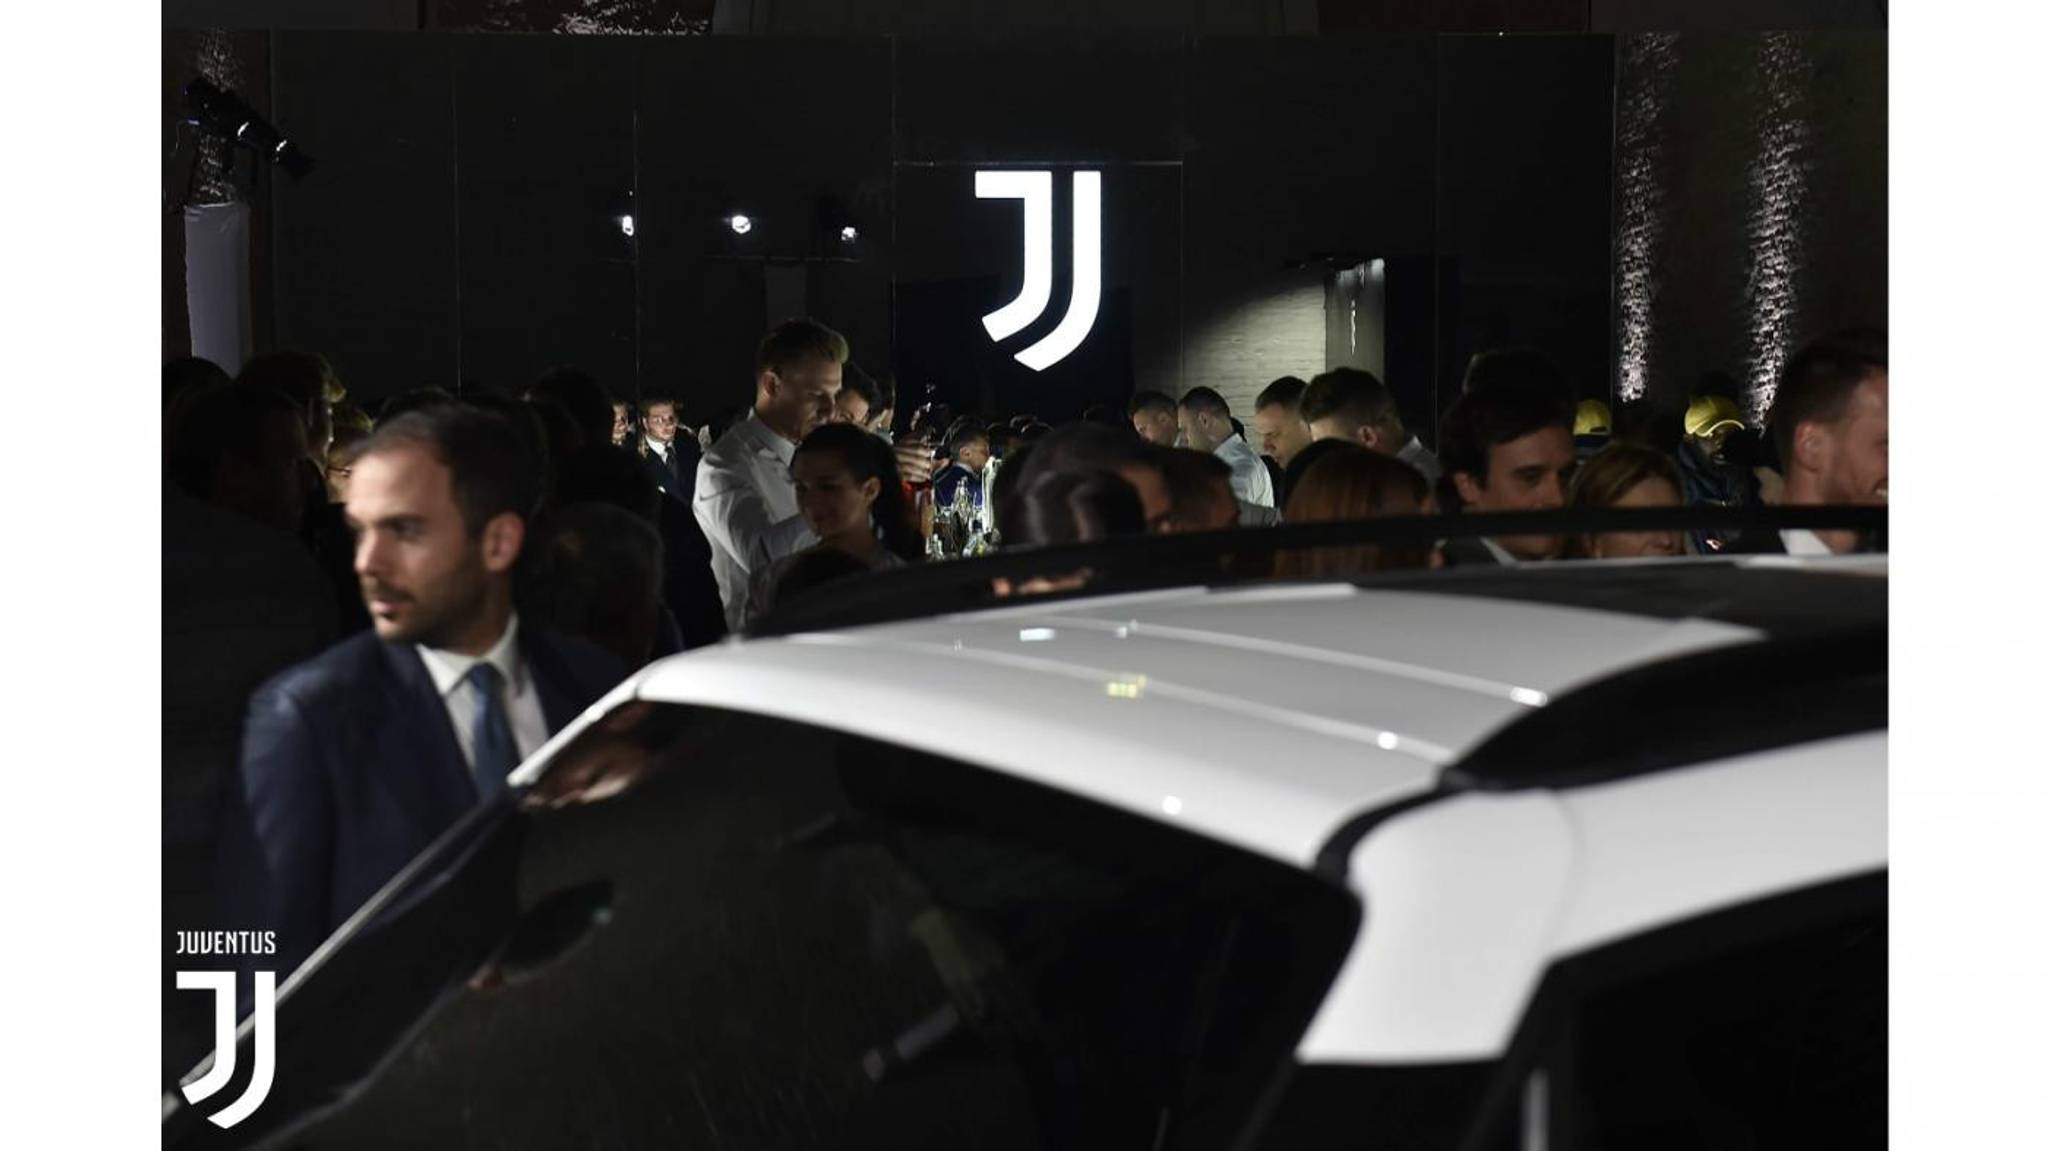 Juventus: transforming a team into a lifestyle brand